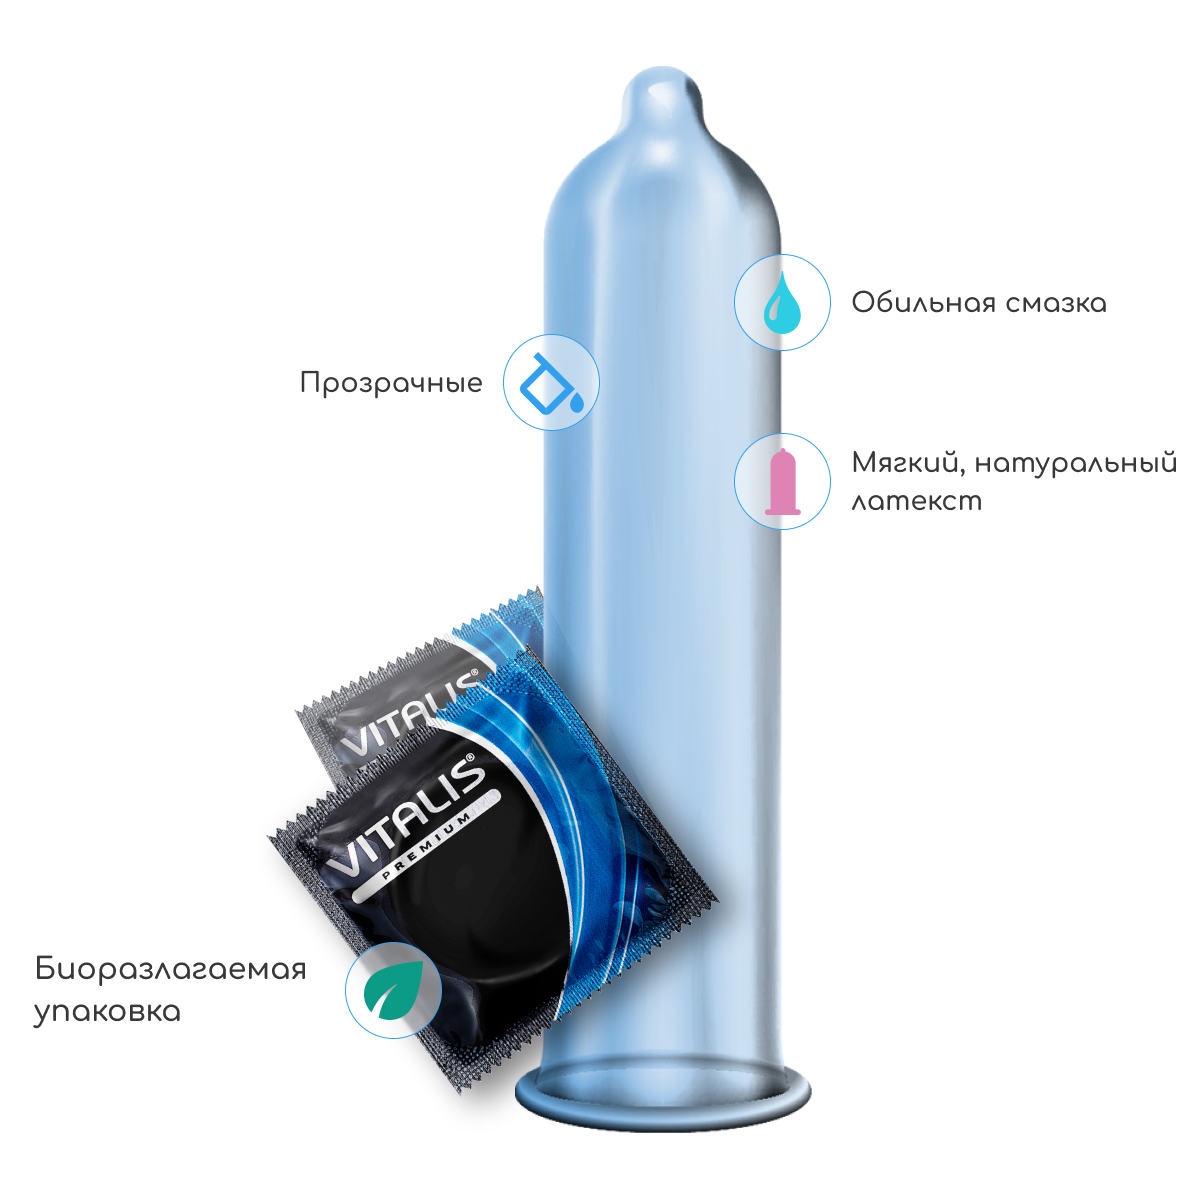 Презервативы классические Vitalis Premium, 3 шт